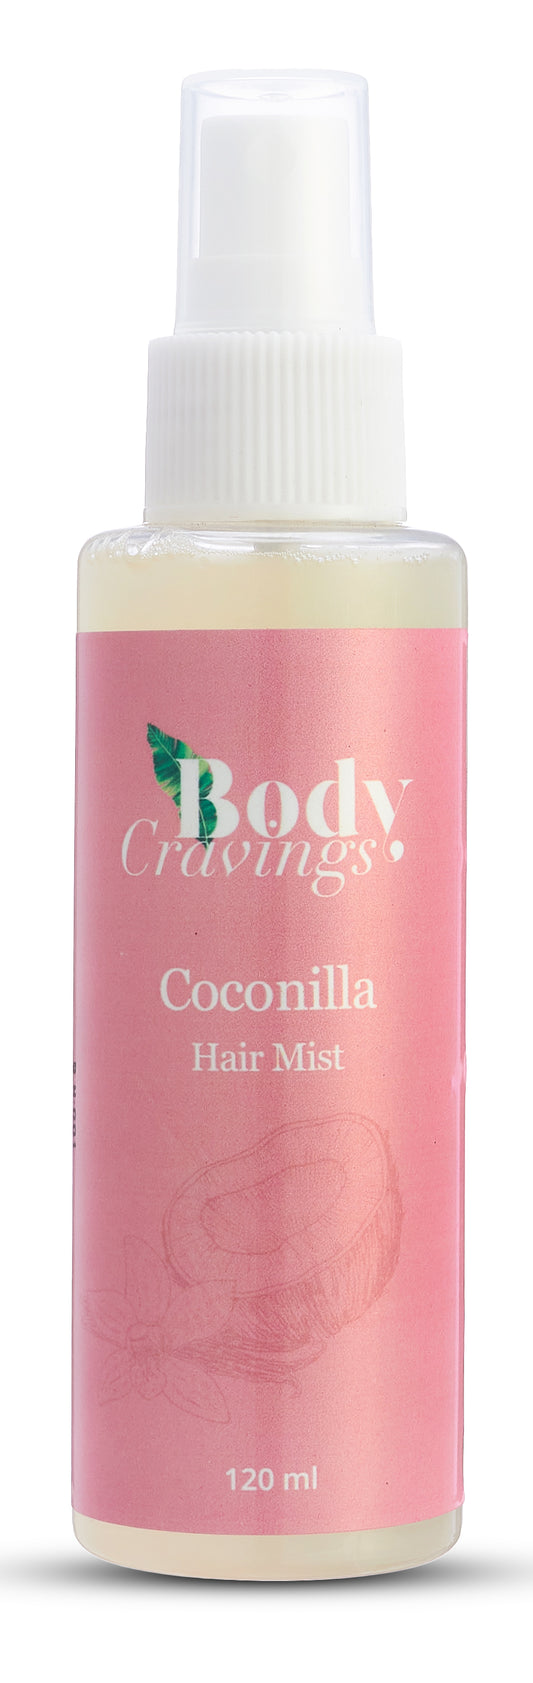 Coconilla Hair Mist